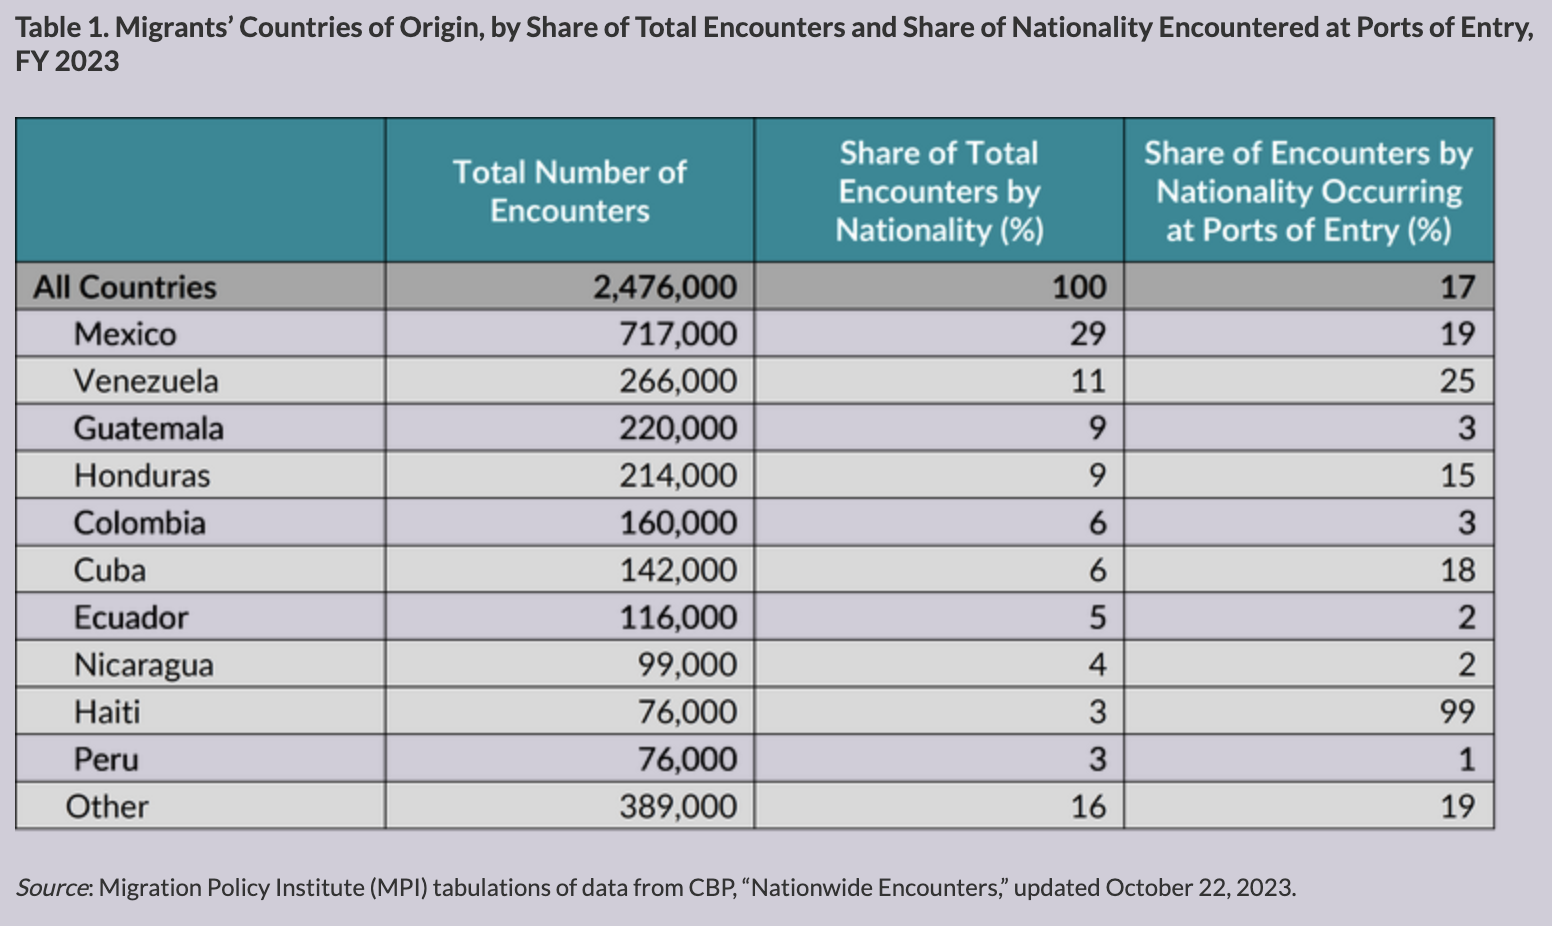 Migrants' Countries of Origin by share of total encounters. All countries- 2,476,000. Mexico- 717,000. Venezuela- 266,000. Guatemala- 220,000. Honduras- 214,000. Colombia- 160,000. Cuba- 142,000. Ecuador- 116,000. Nicaragua- 99,000. Haiti- 76,000. Peru- 76,000. Other- 389,000.